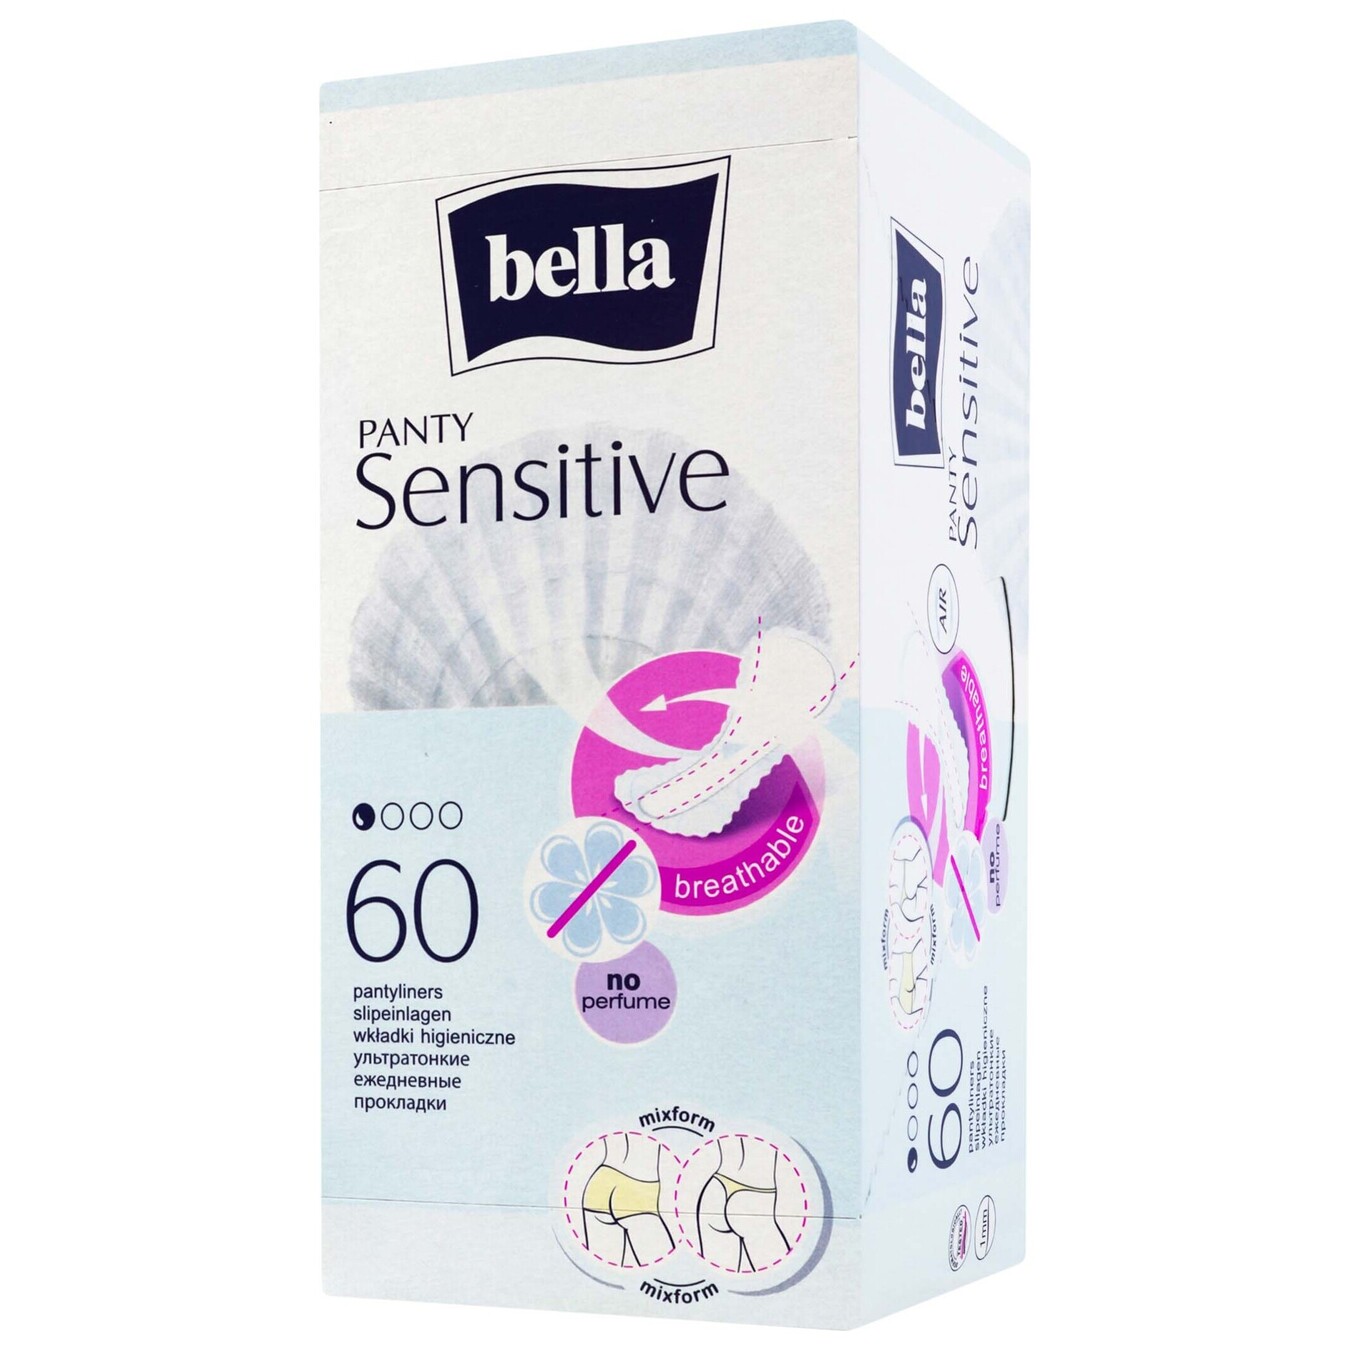 Daily pads Bella Panty Sensitive 50+10 pcs 2